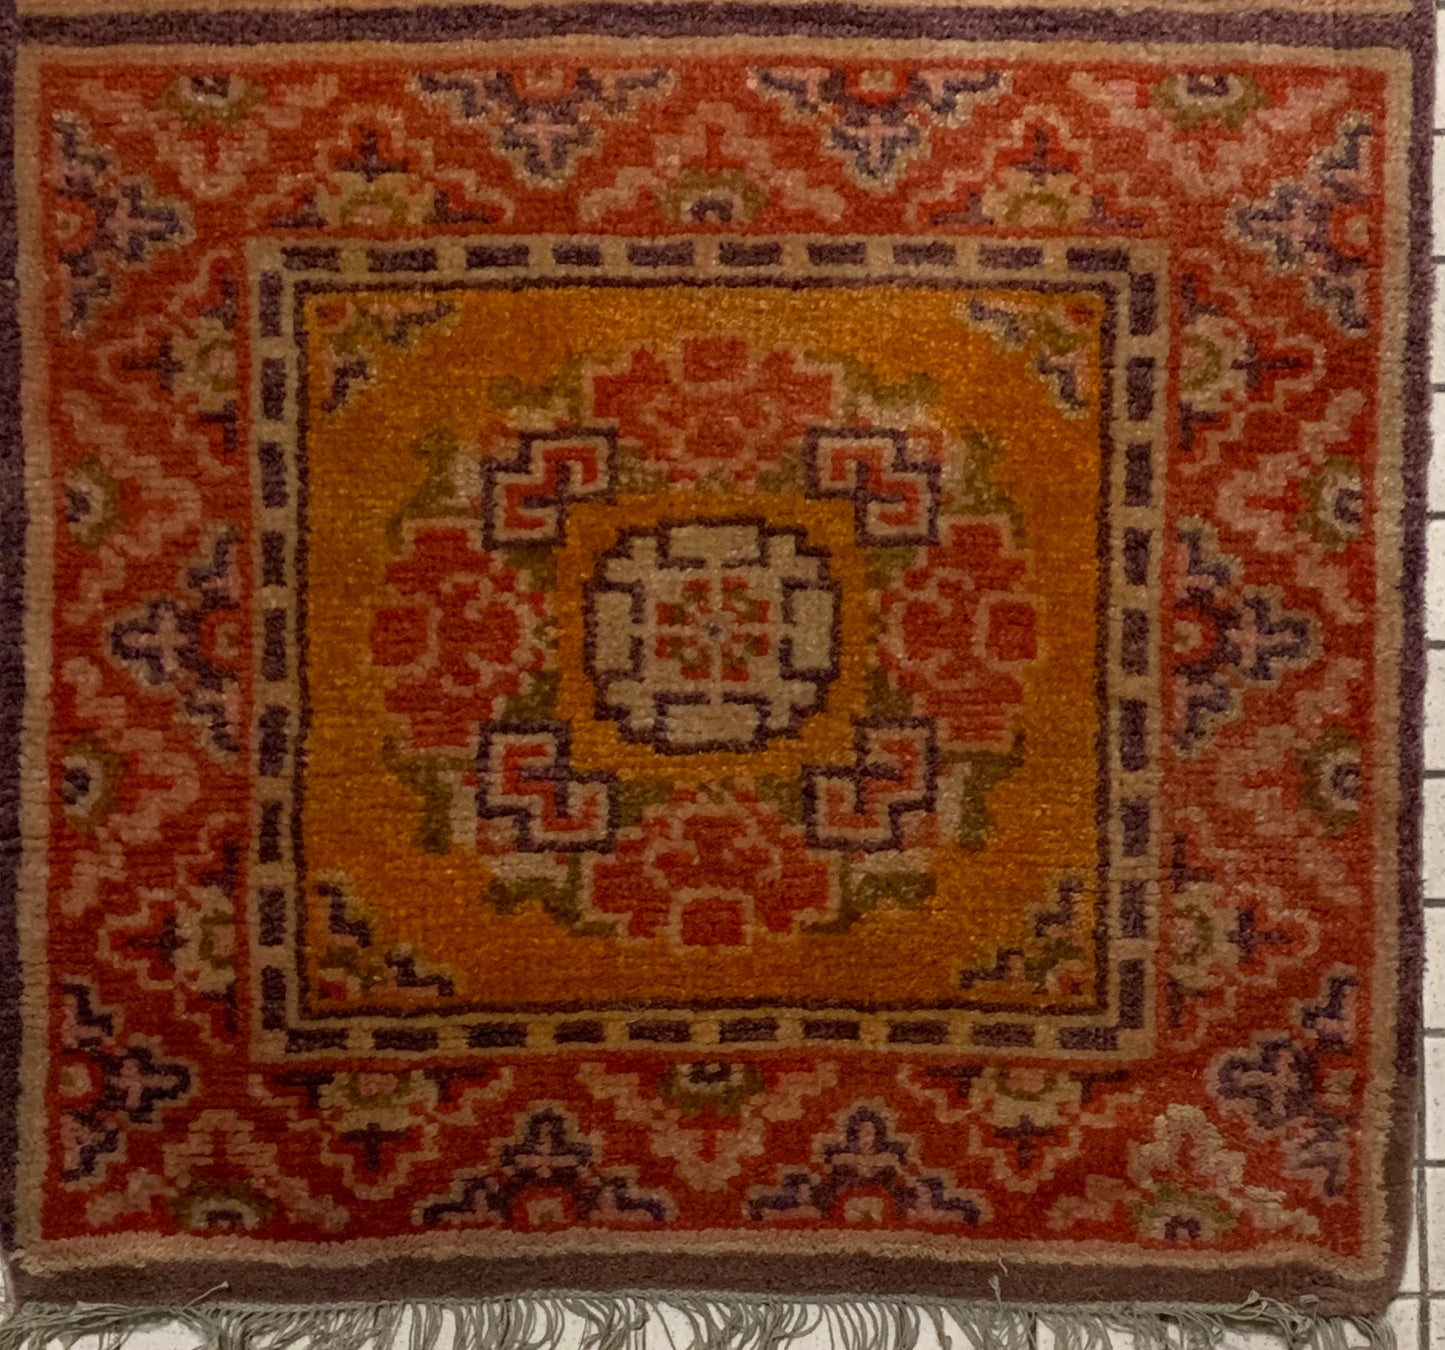 An antique triple seater Tibetan meditation rug